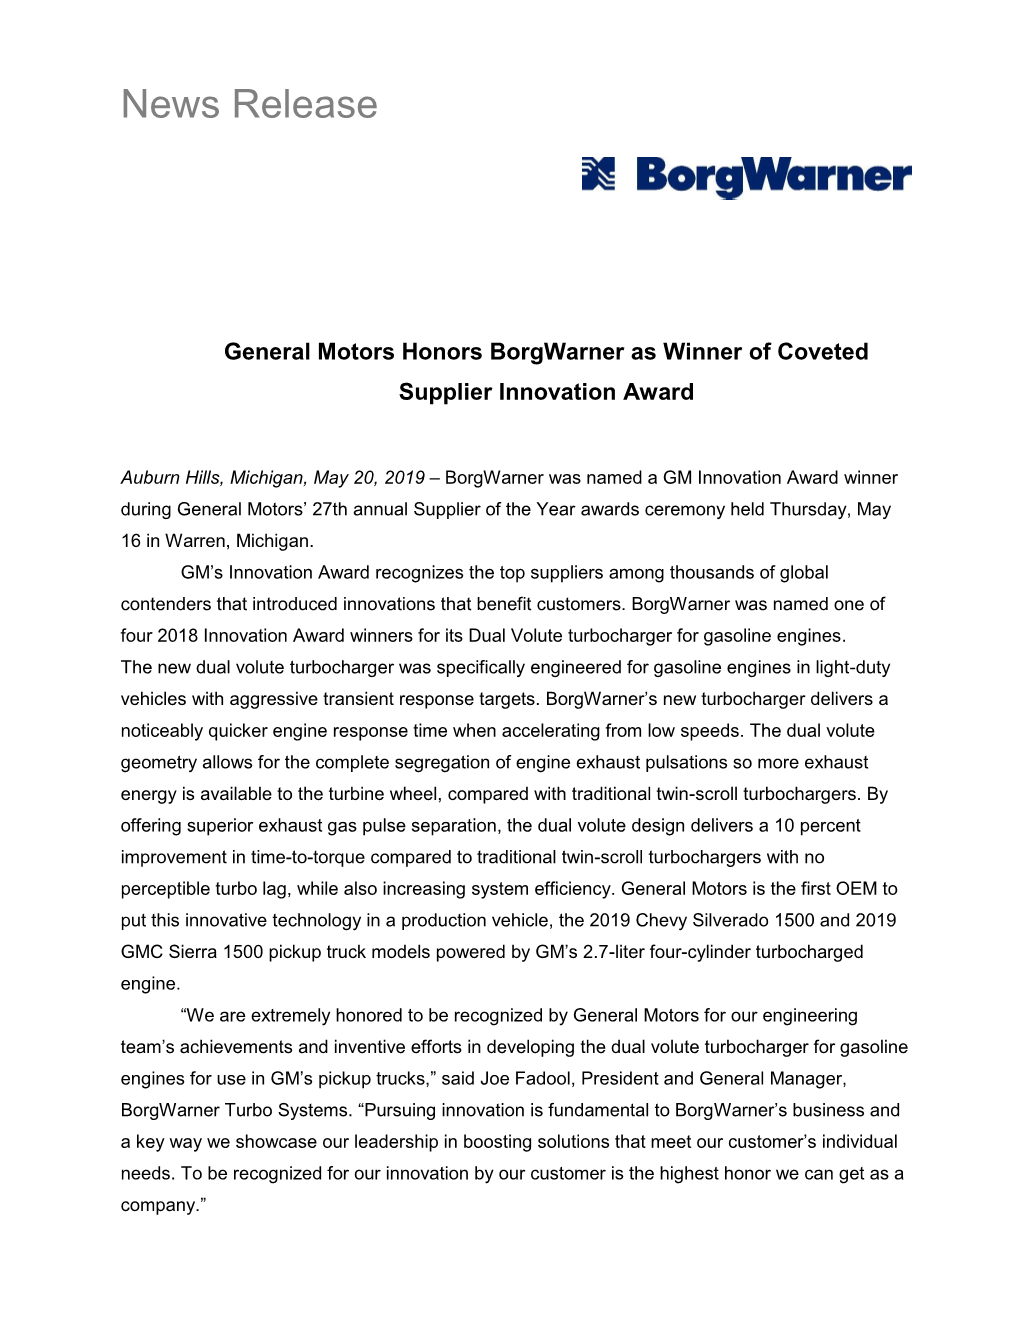 General Motors Honors Borgwarner As Winner of Coveted Supplier